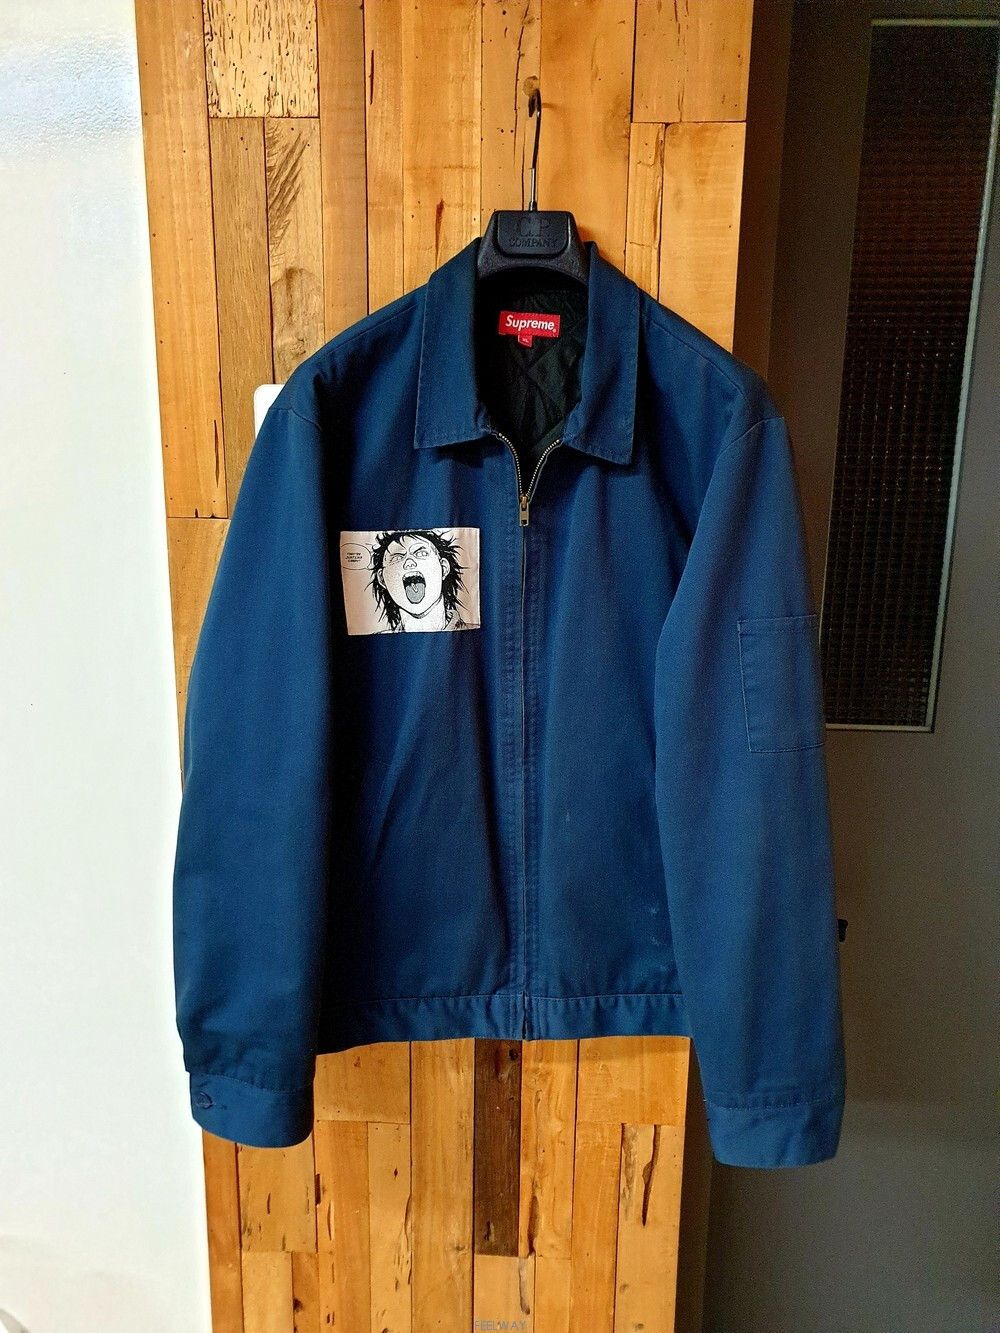 Supreme Akira Work Jacket | Grailed